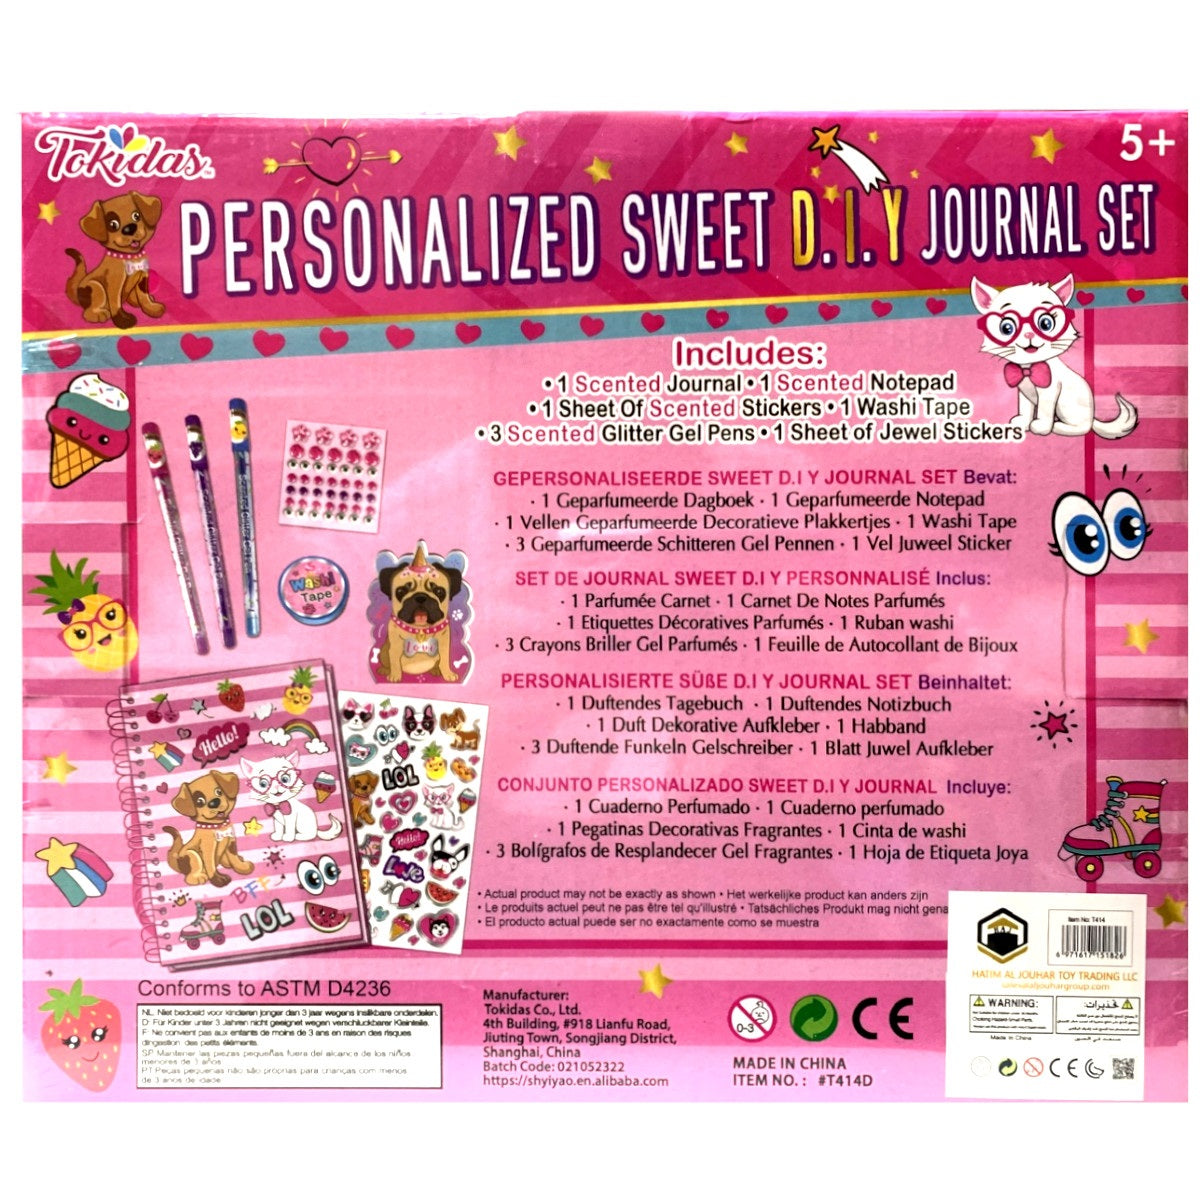 Tokidas Personalized Sweet D.I.Y Journal Set